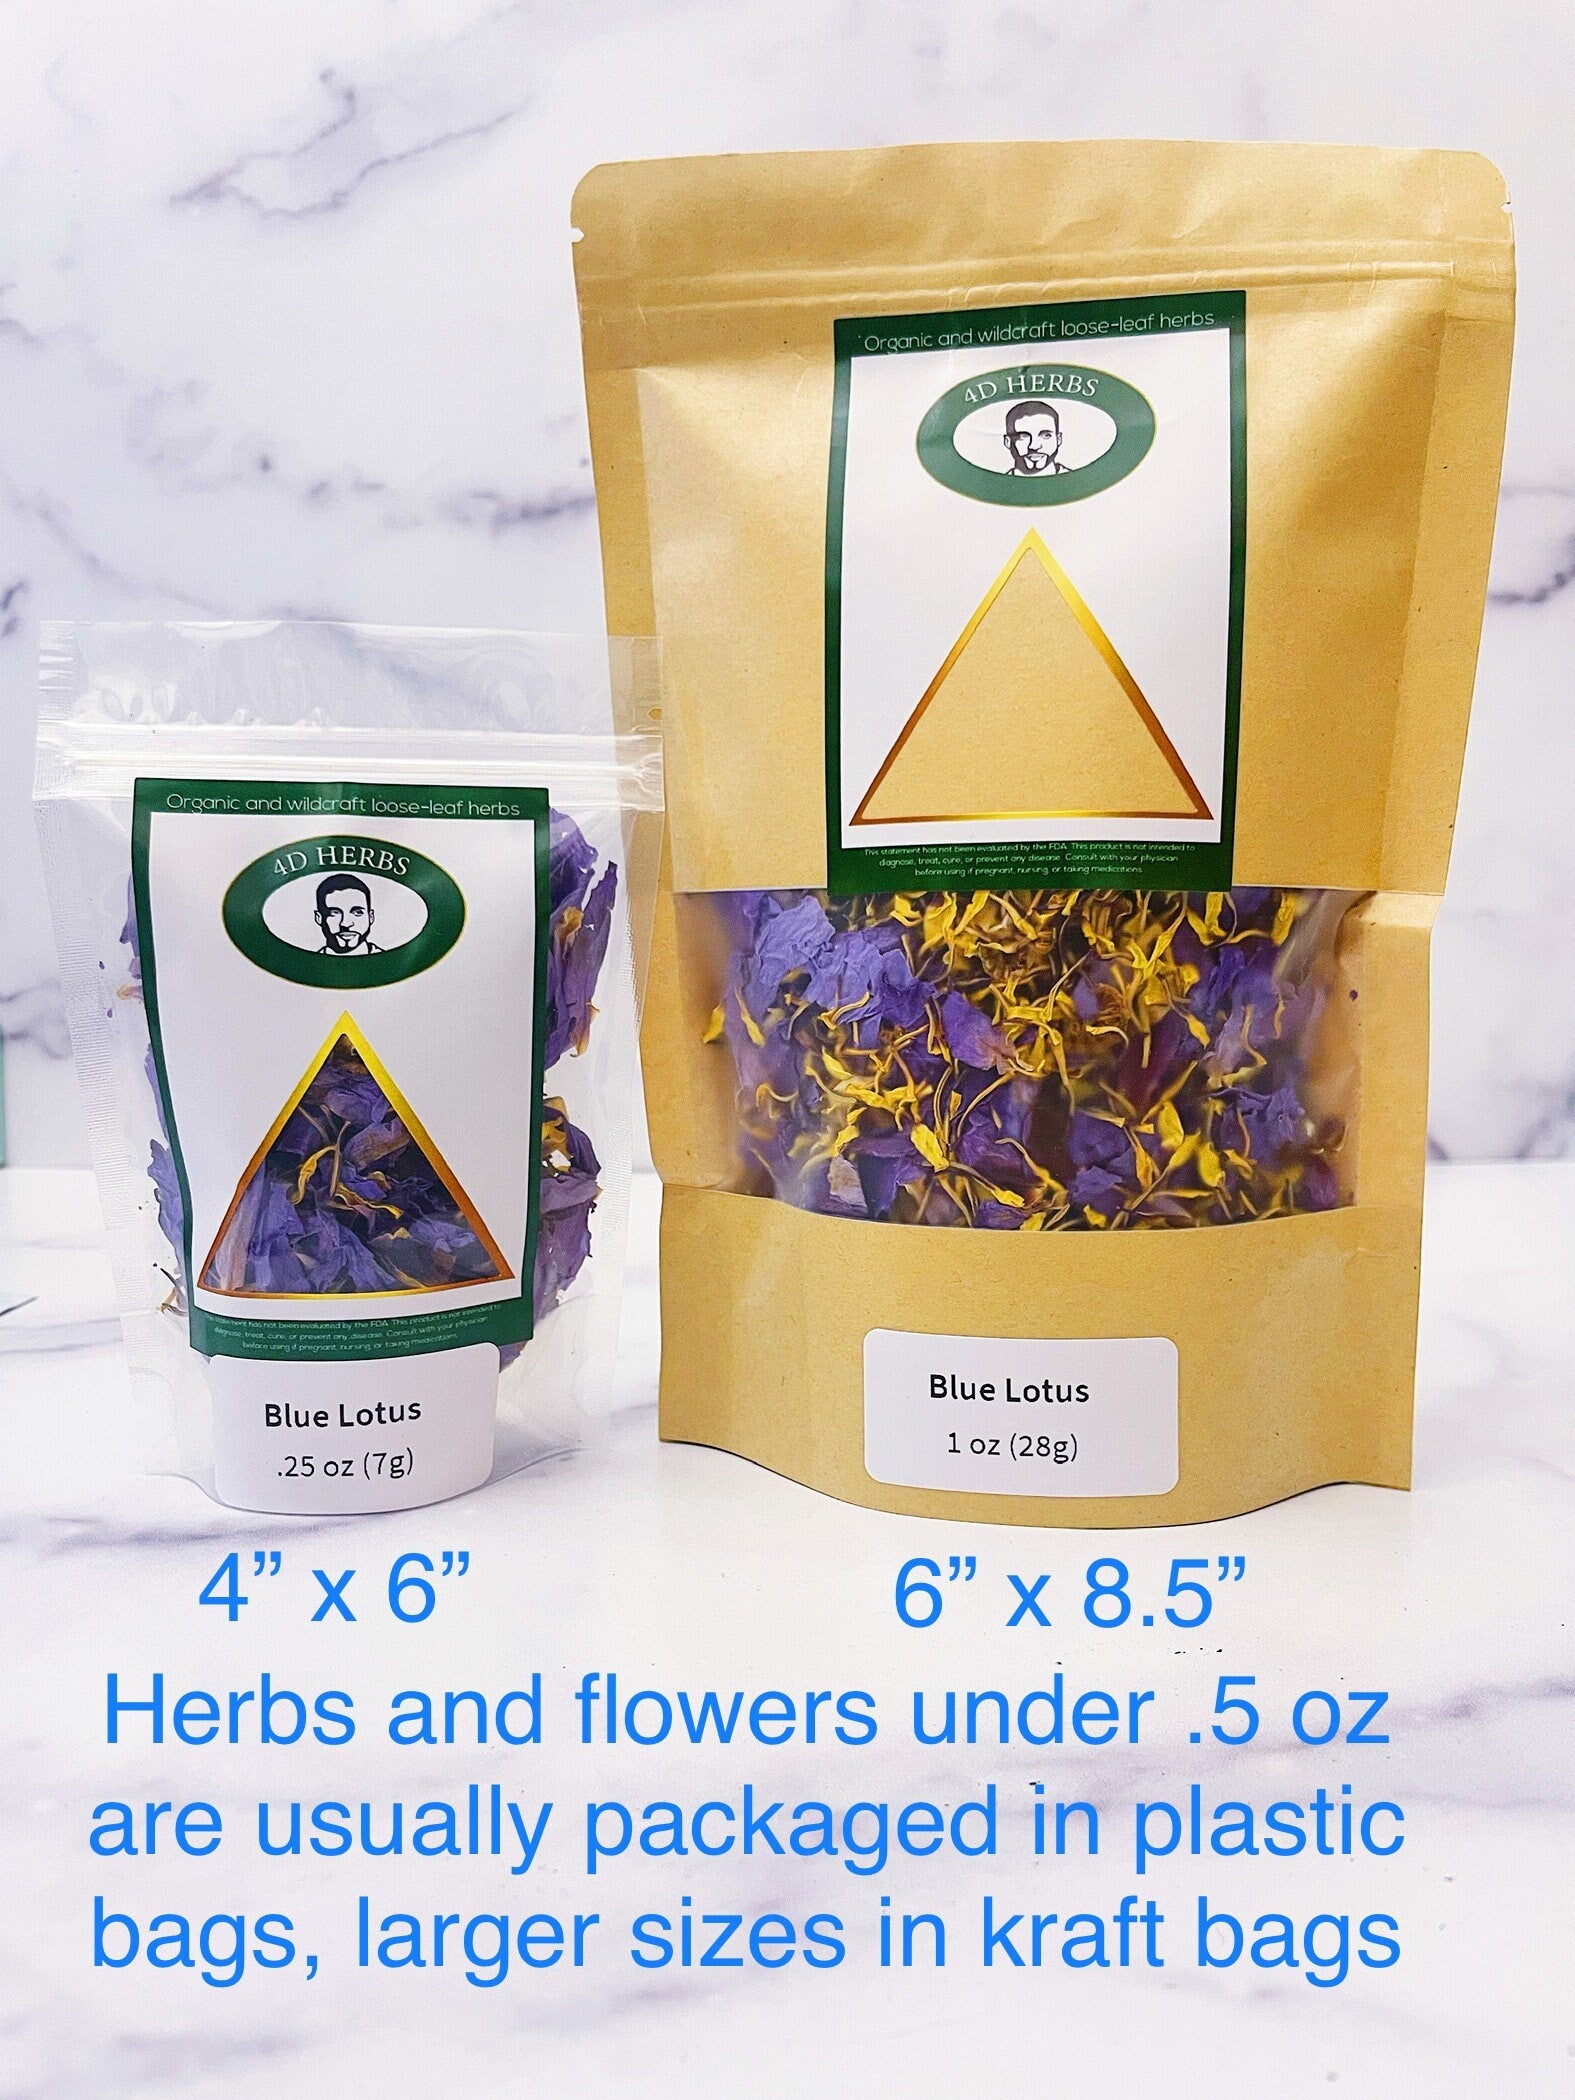 Calea Zacatechichi, Organic Calea ternifolia, Dream Herb, Ancient Herbal Medicine, calea zacatechichi herb